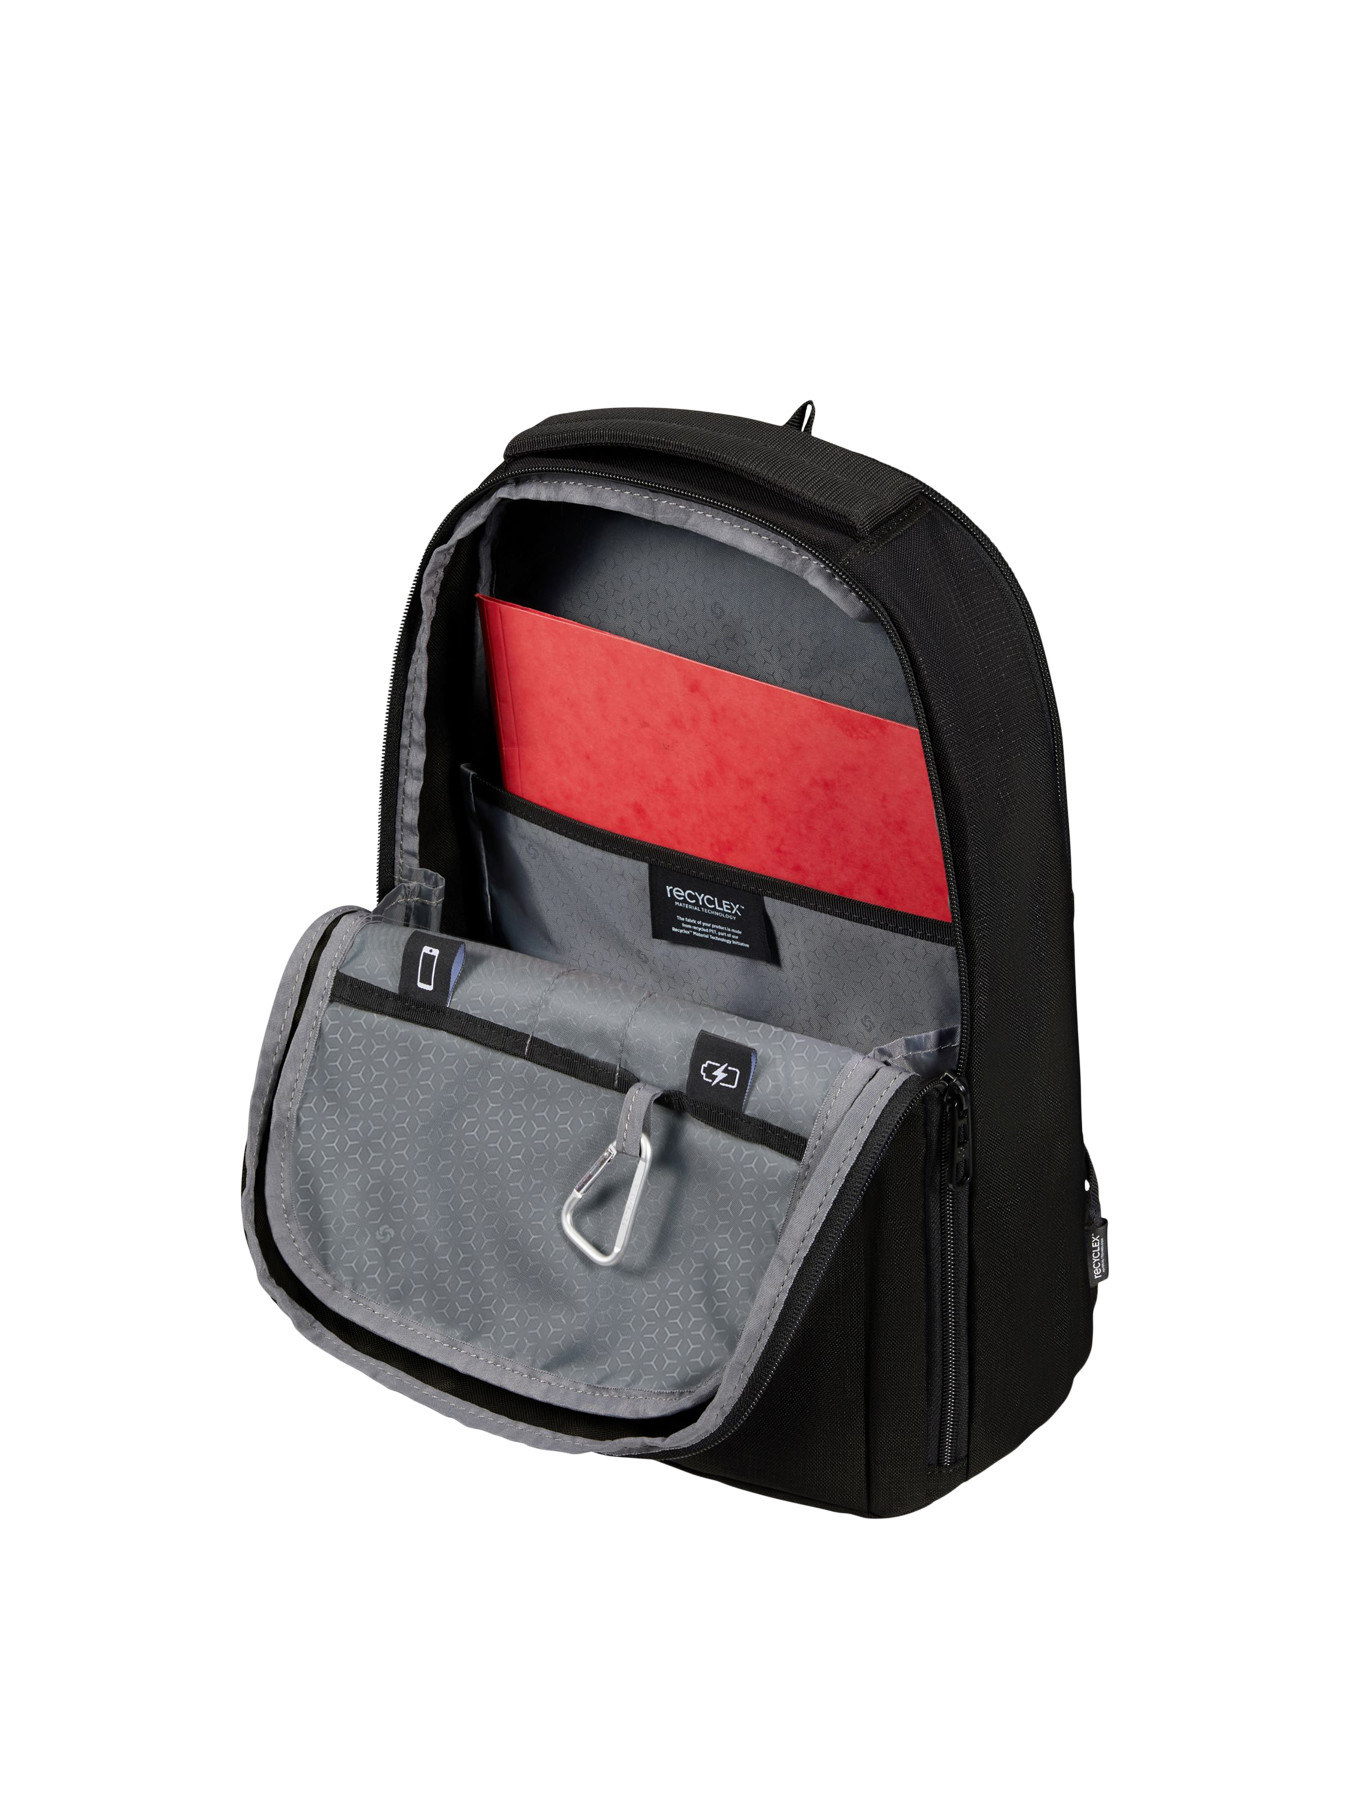 Samsonite Roader Small Laptop Backpack | Fenwick